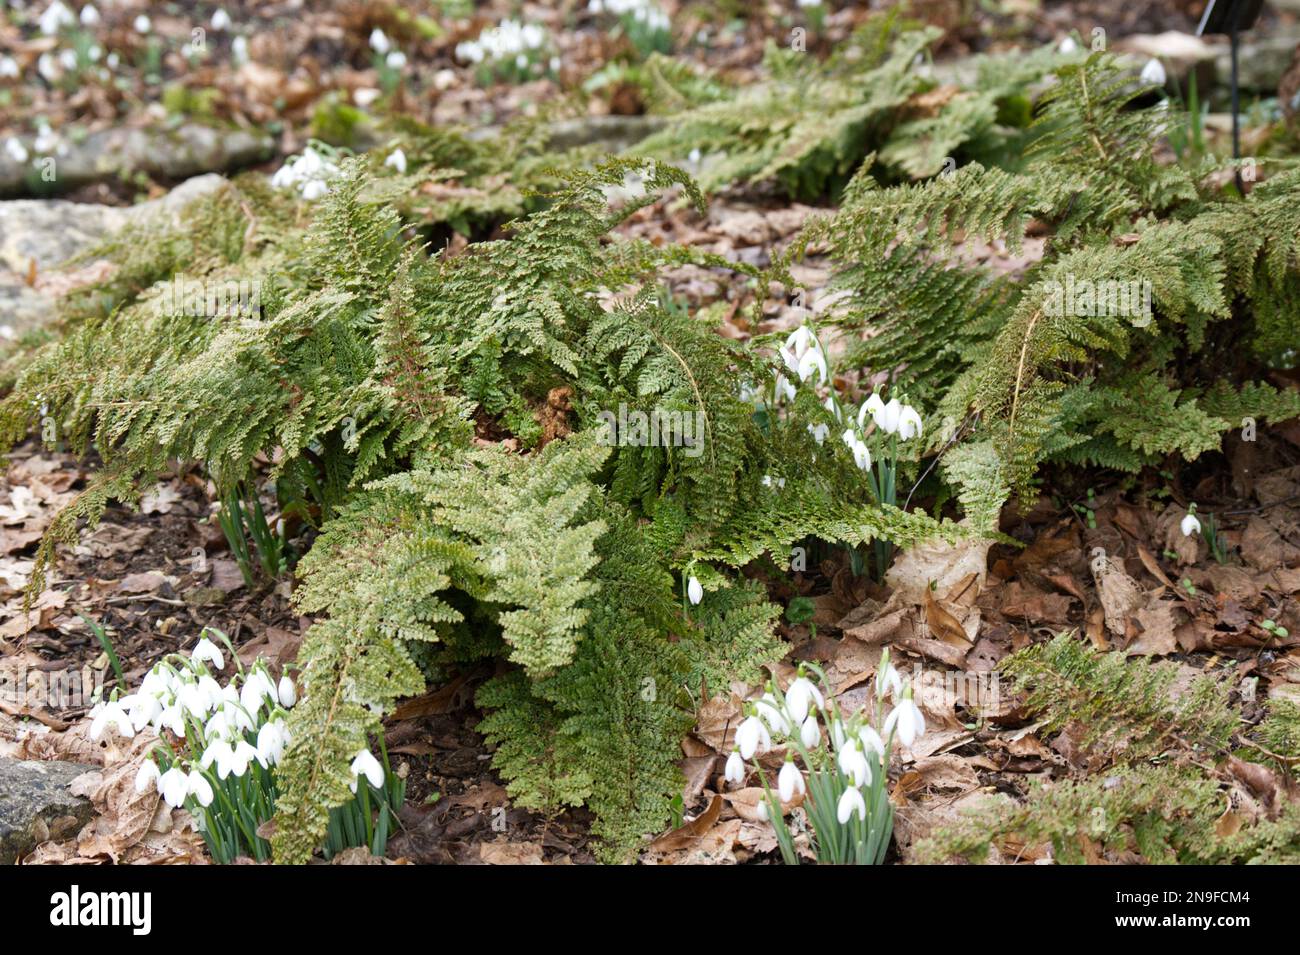 snowdrops, galanthus nivalis growing amongst evergreen fern Polystichum setiferum Plumosum Group in UK woodland February Stock Photo